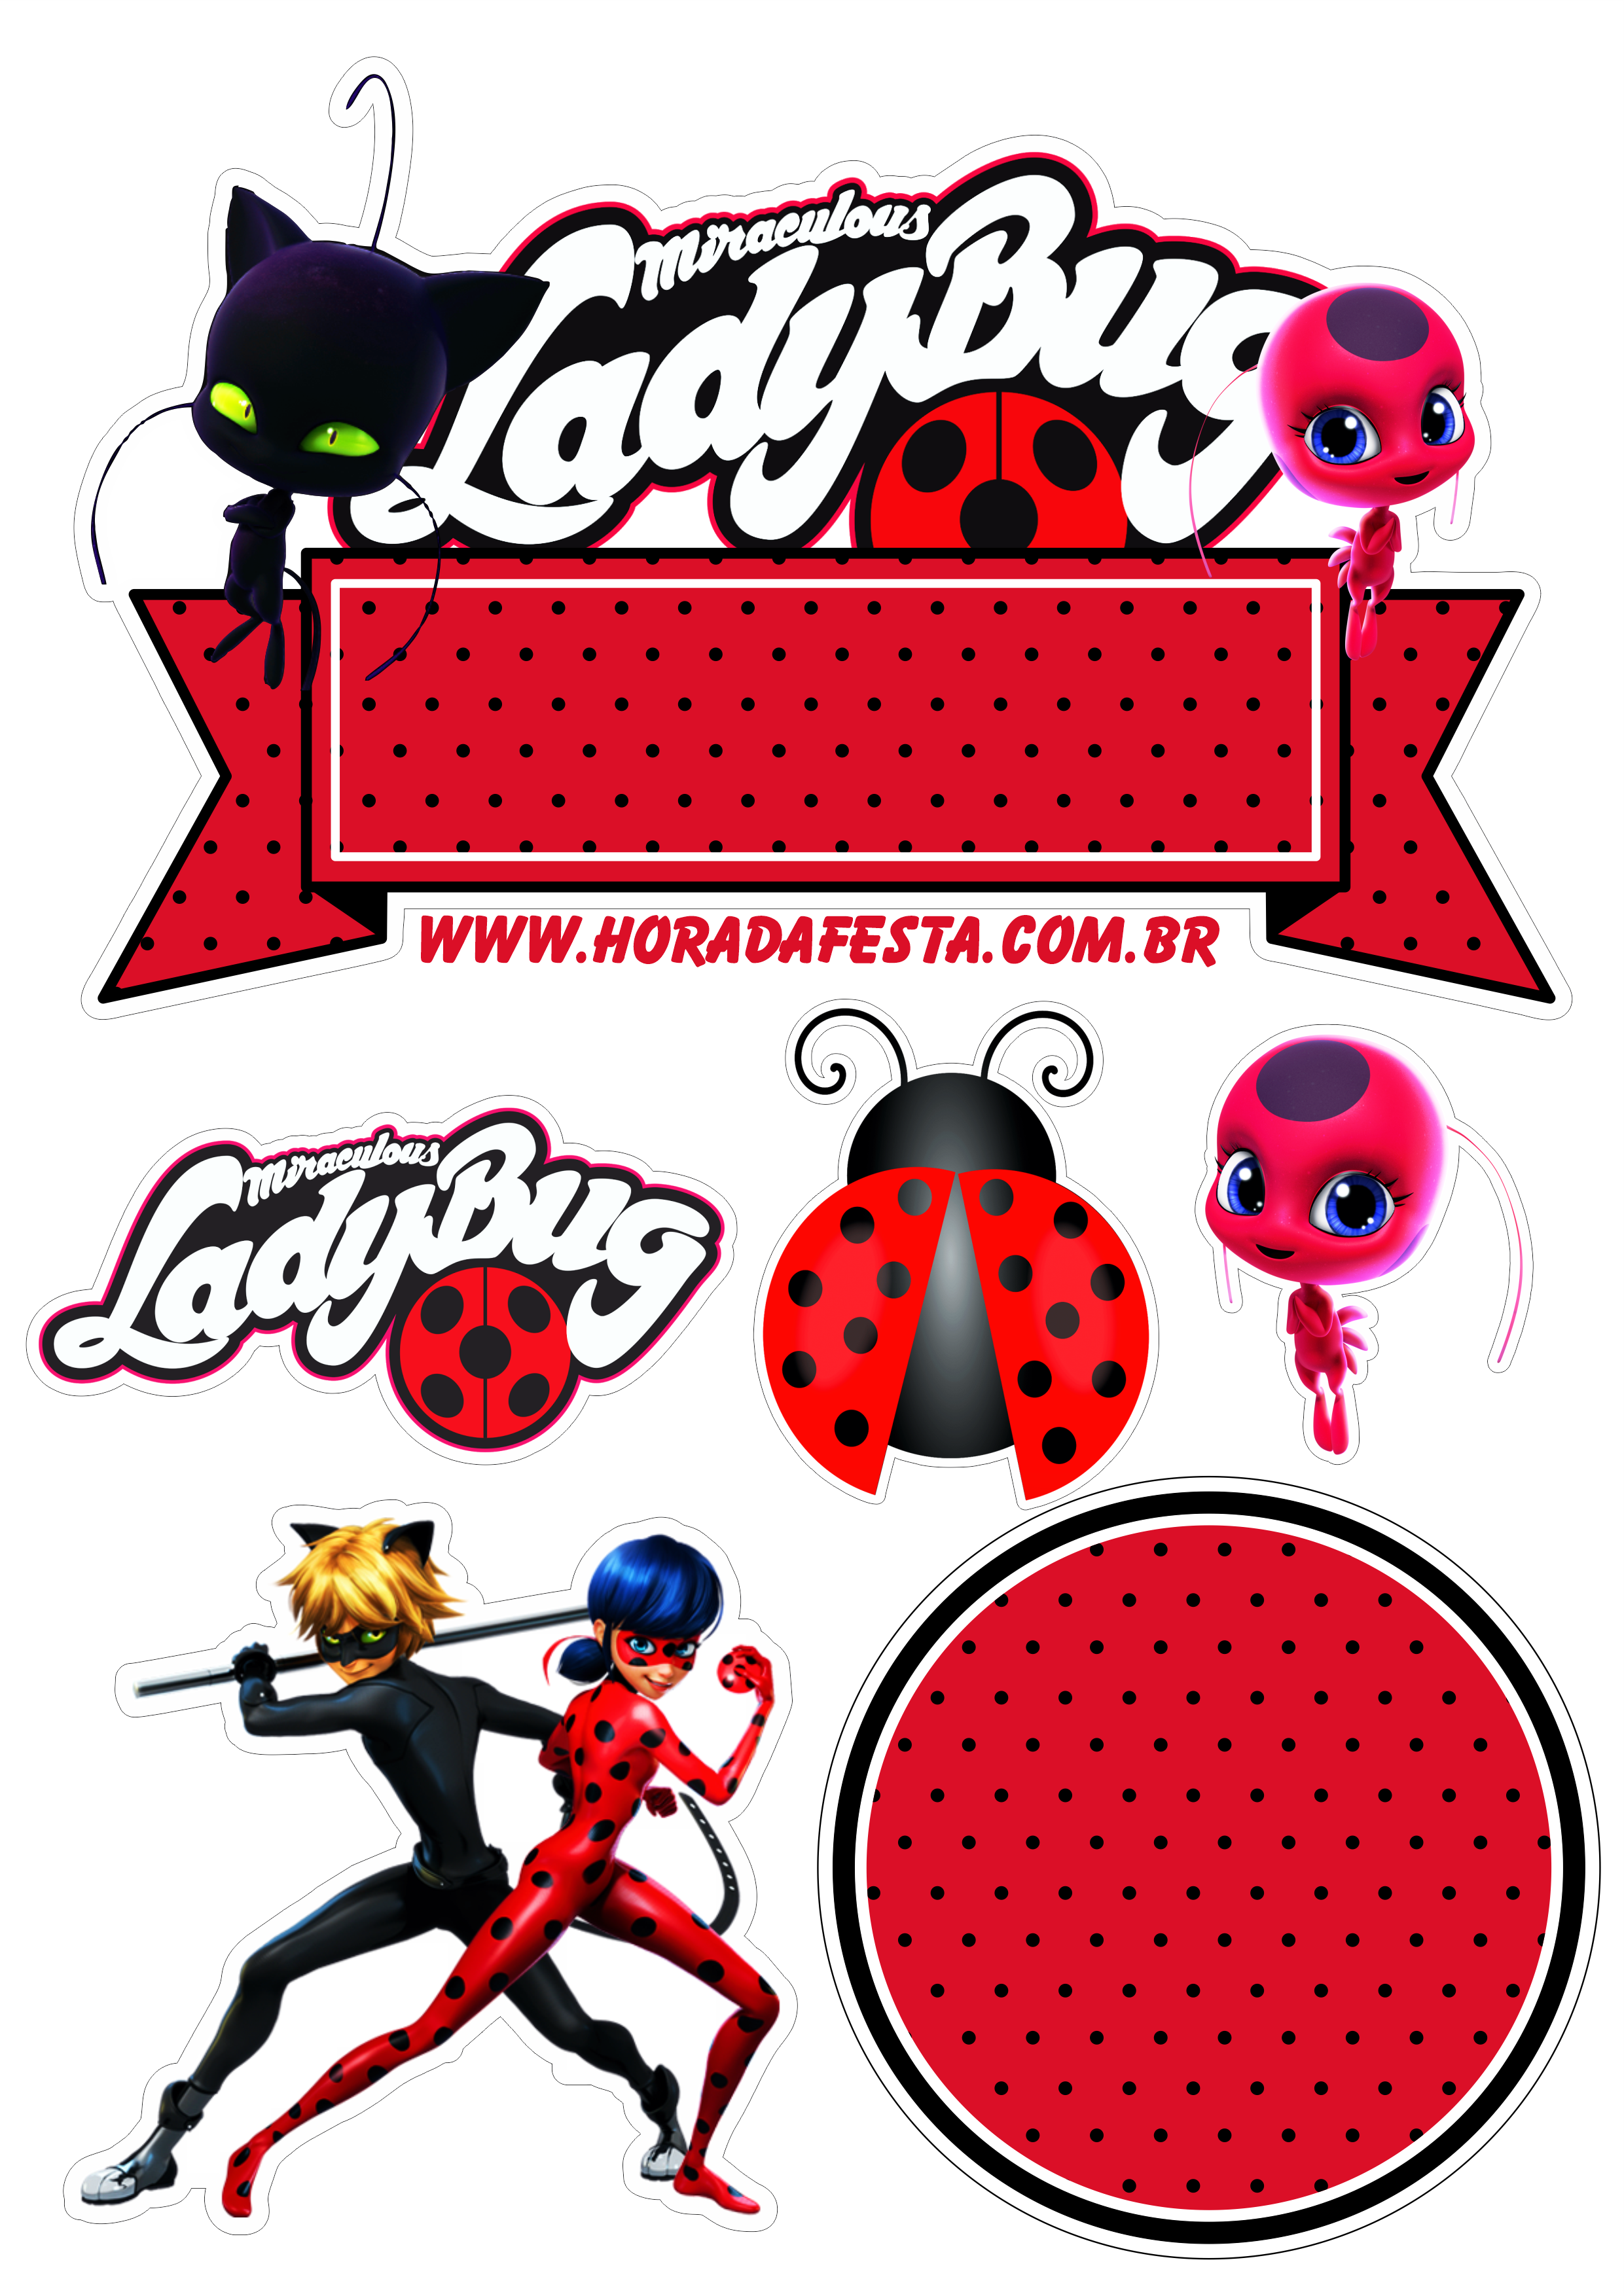 Topo de Bolo Ladybug Para imprimir totalmente gratuito